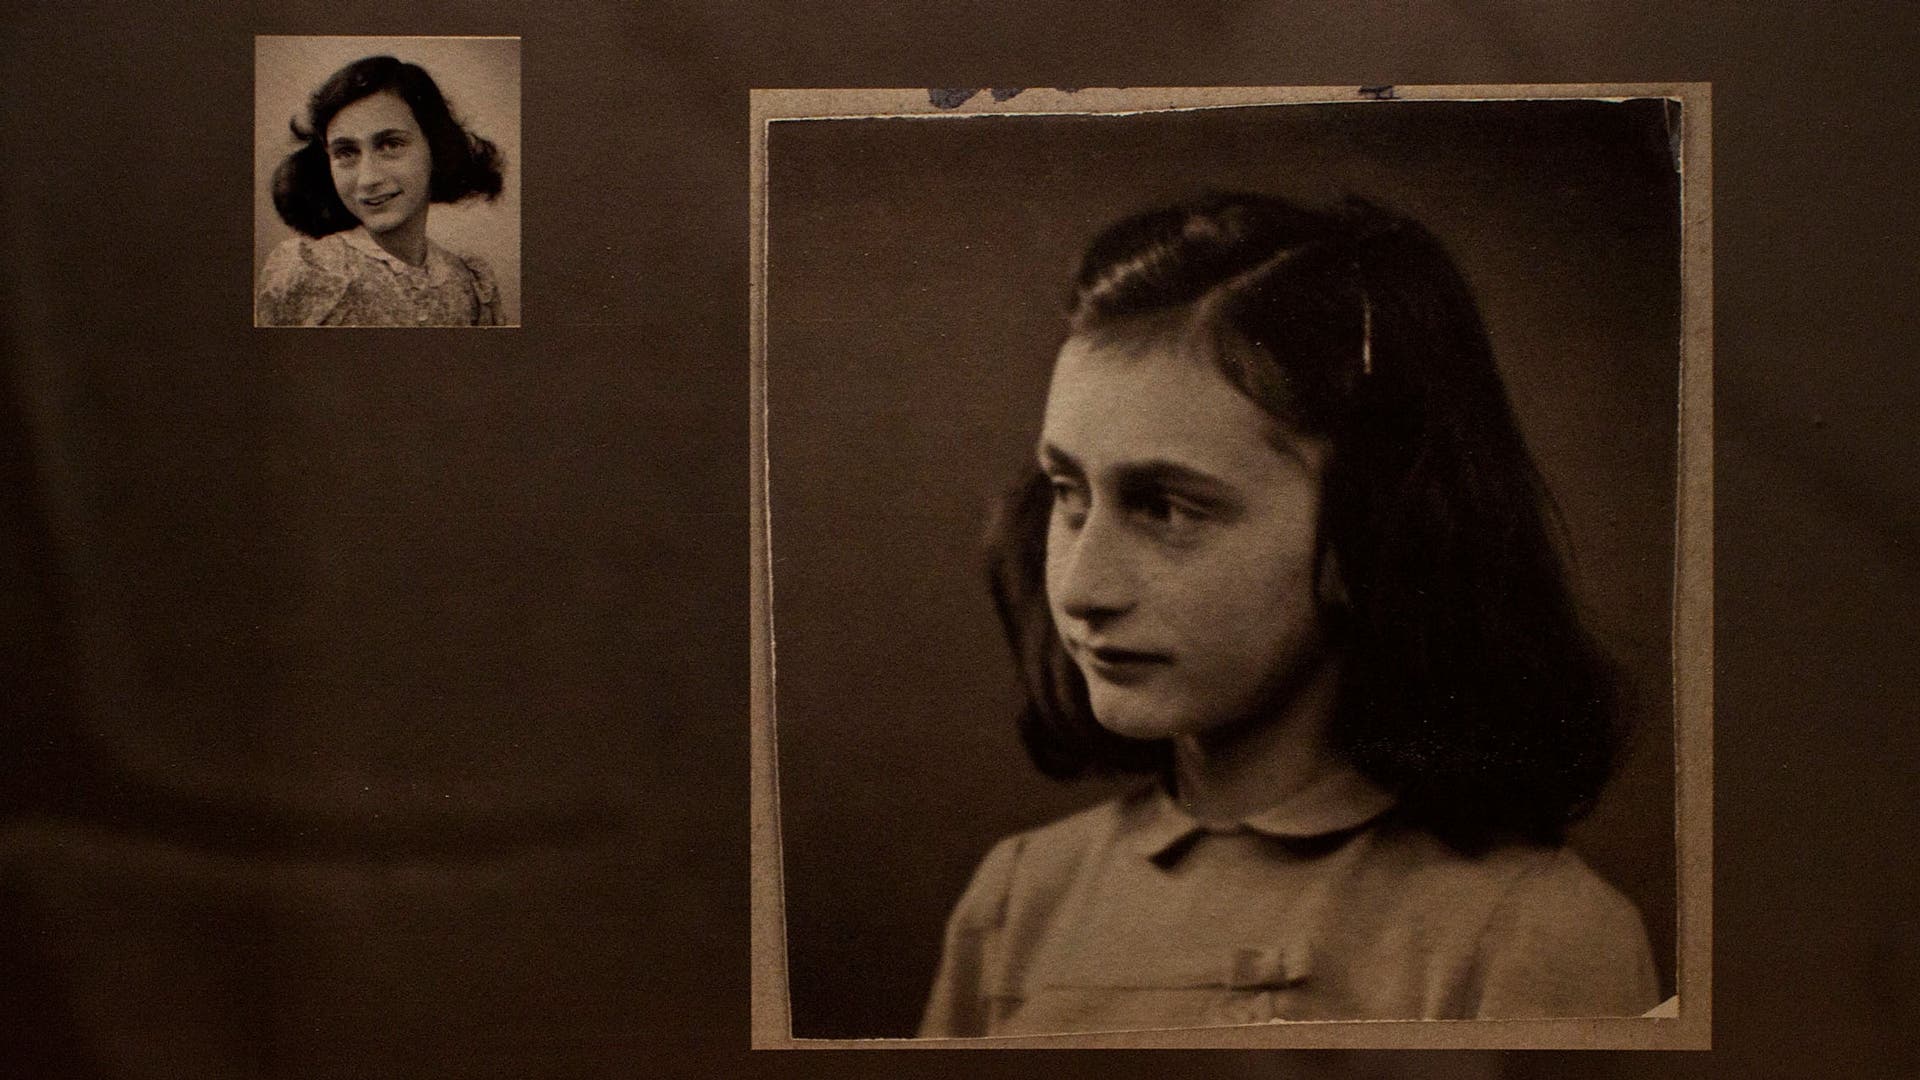 Anne Frank, the Holocaust